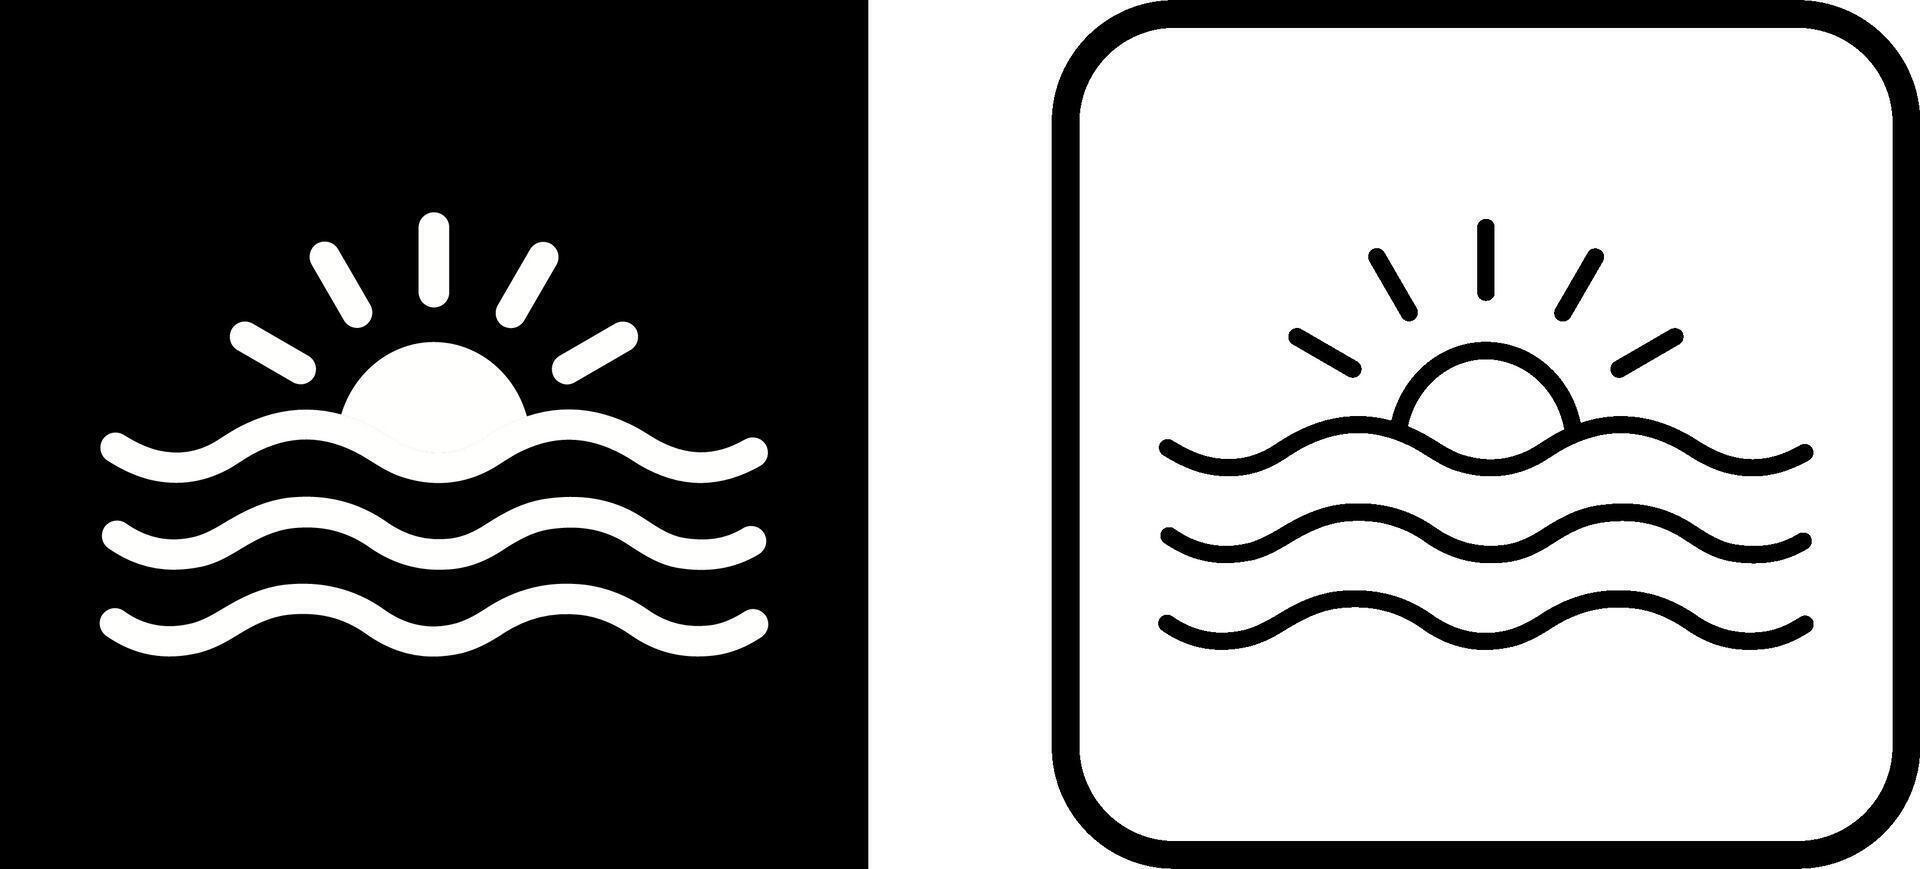 Ozean Vektor Symbol